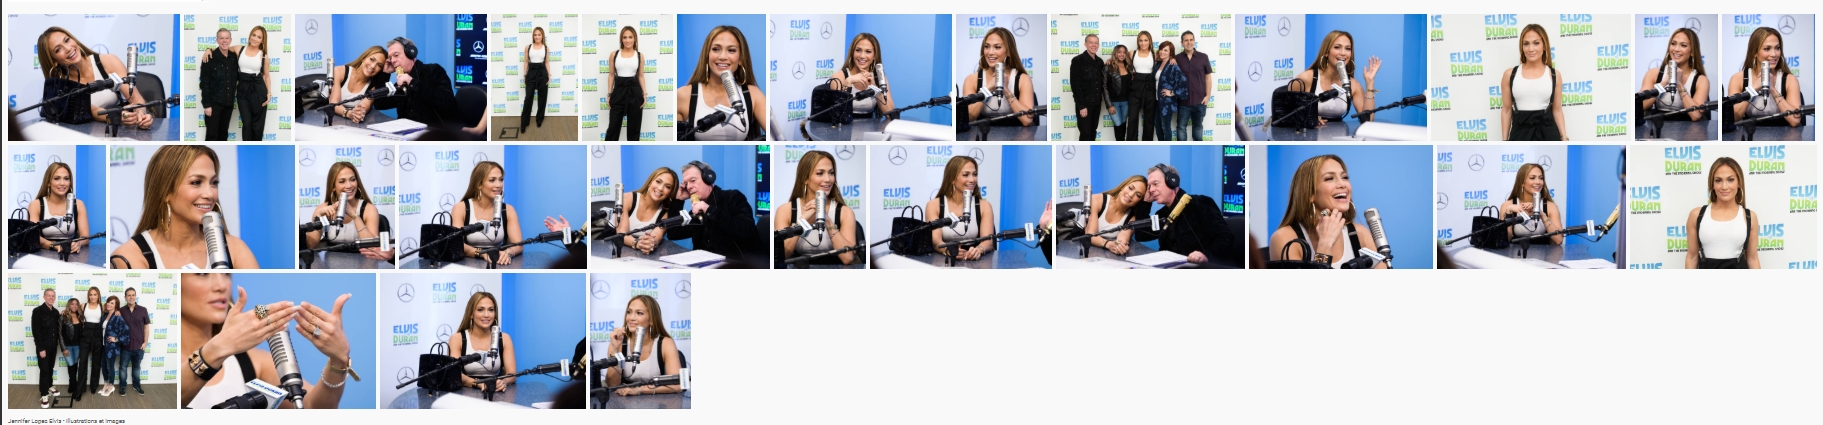 Jennifer Lopez Visits "The Elvis Duran Z100 Morning Show" in NY - April 09, 2019